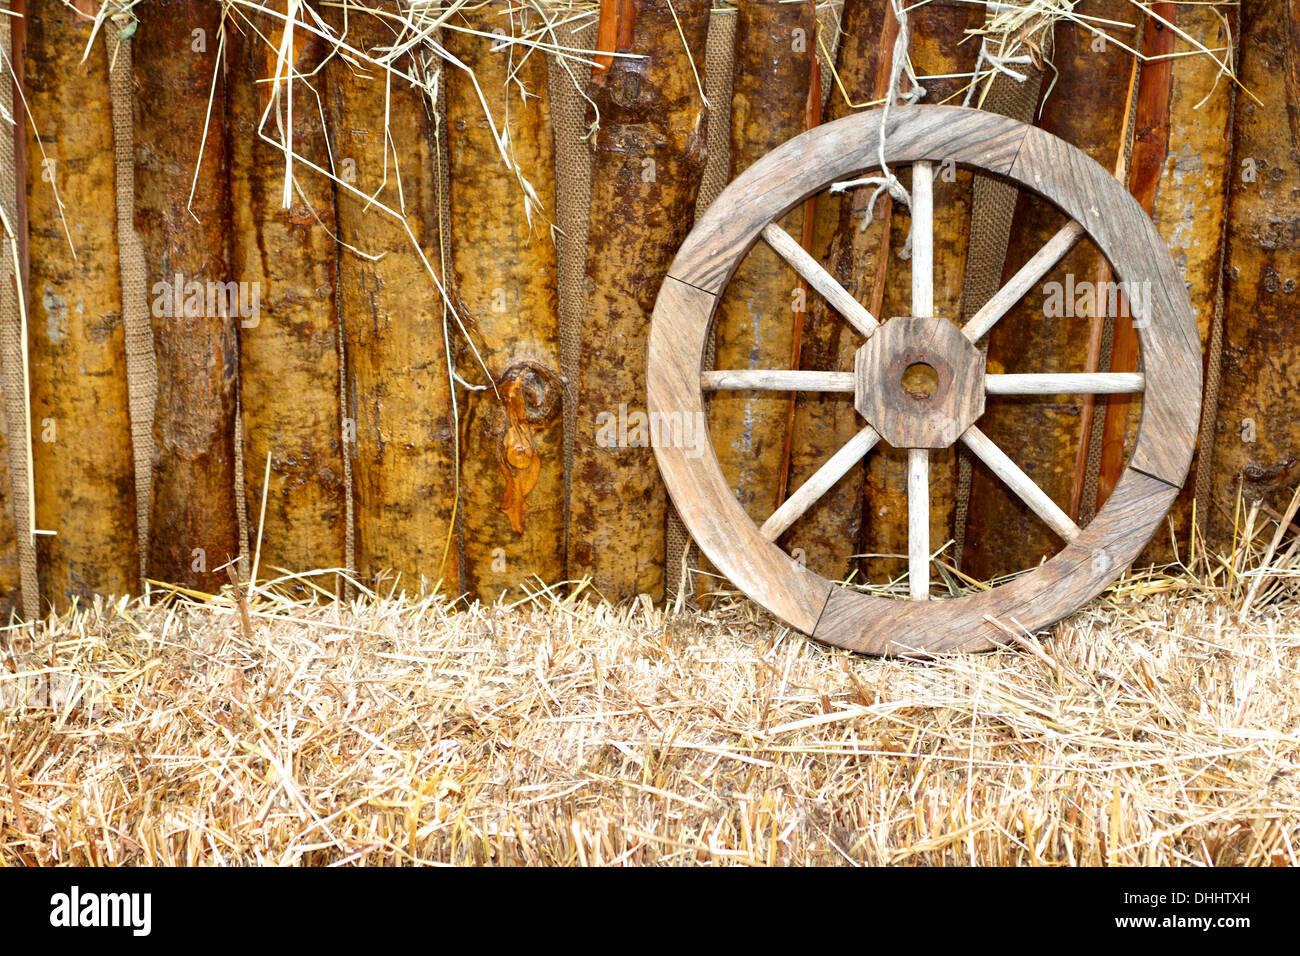 Desktop wheel wood and straw Stock Photo